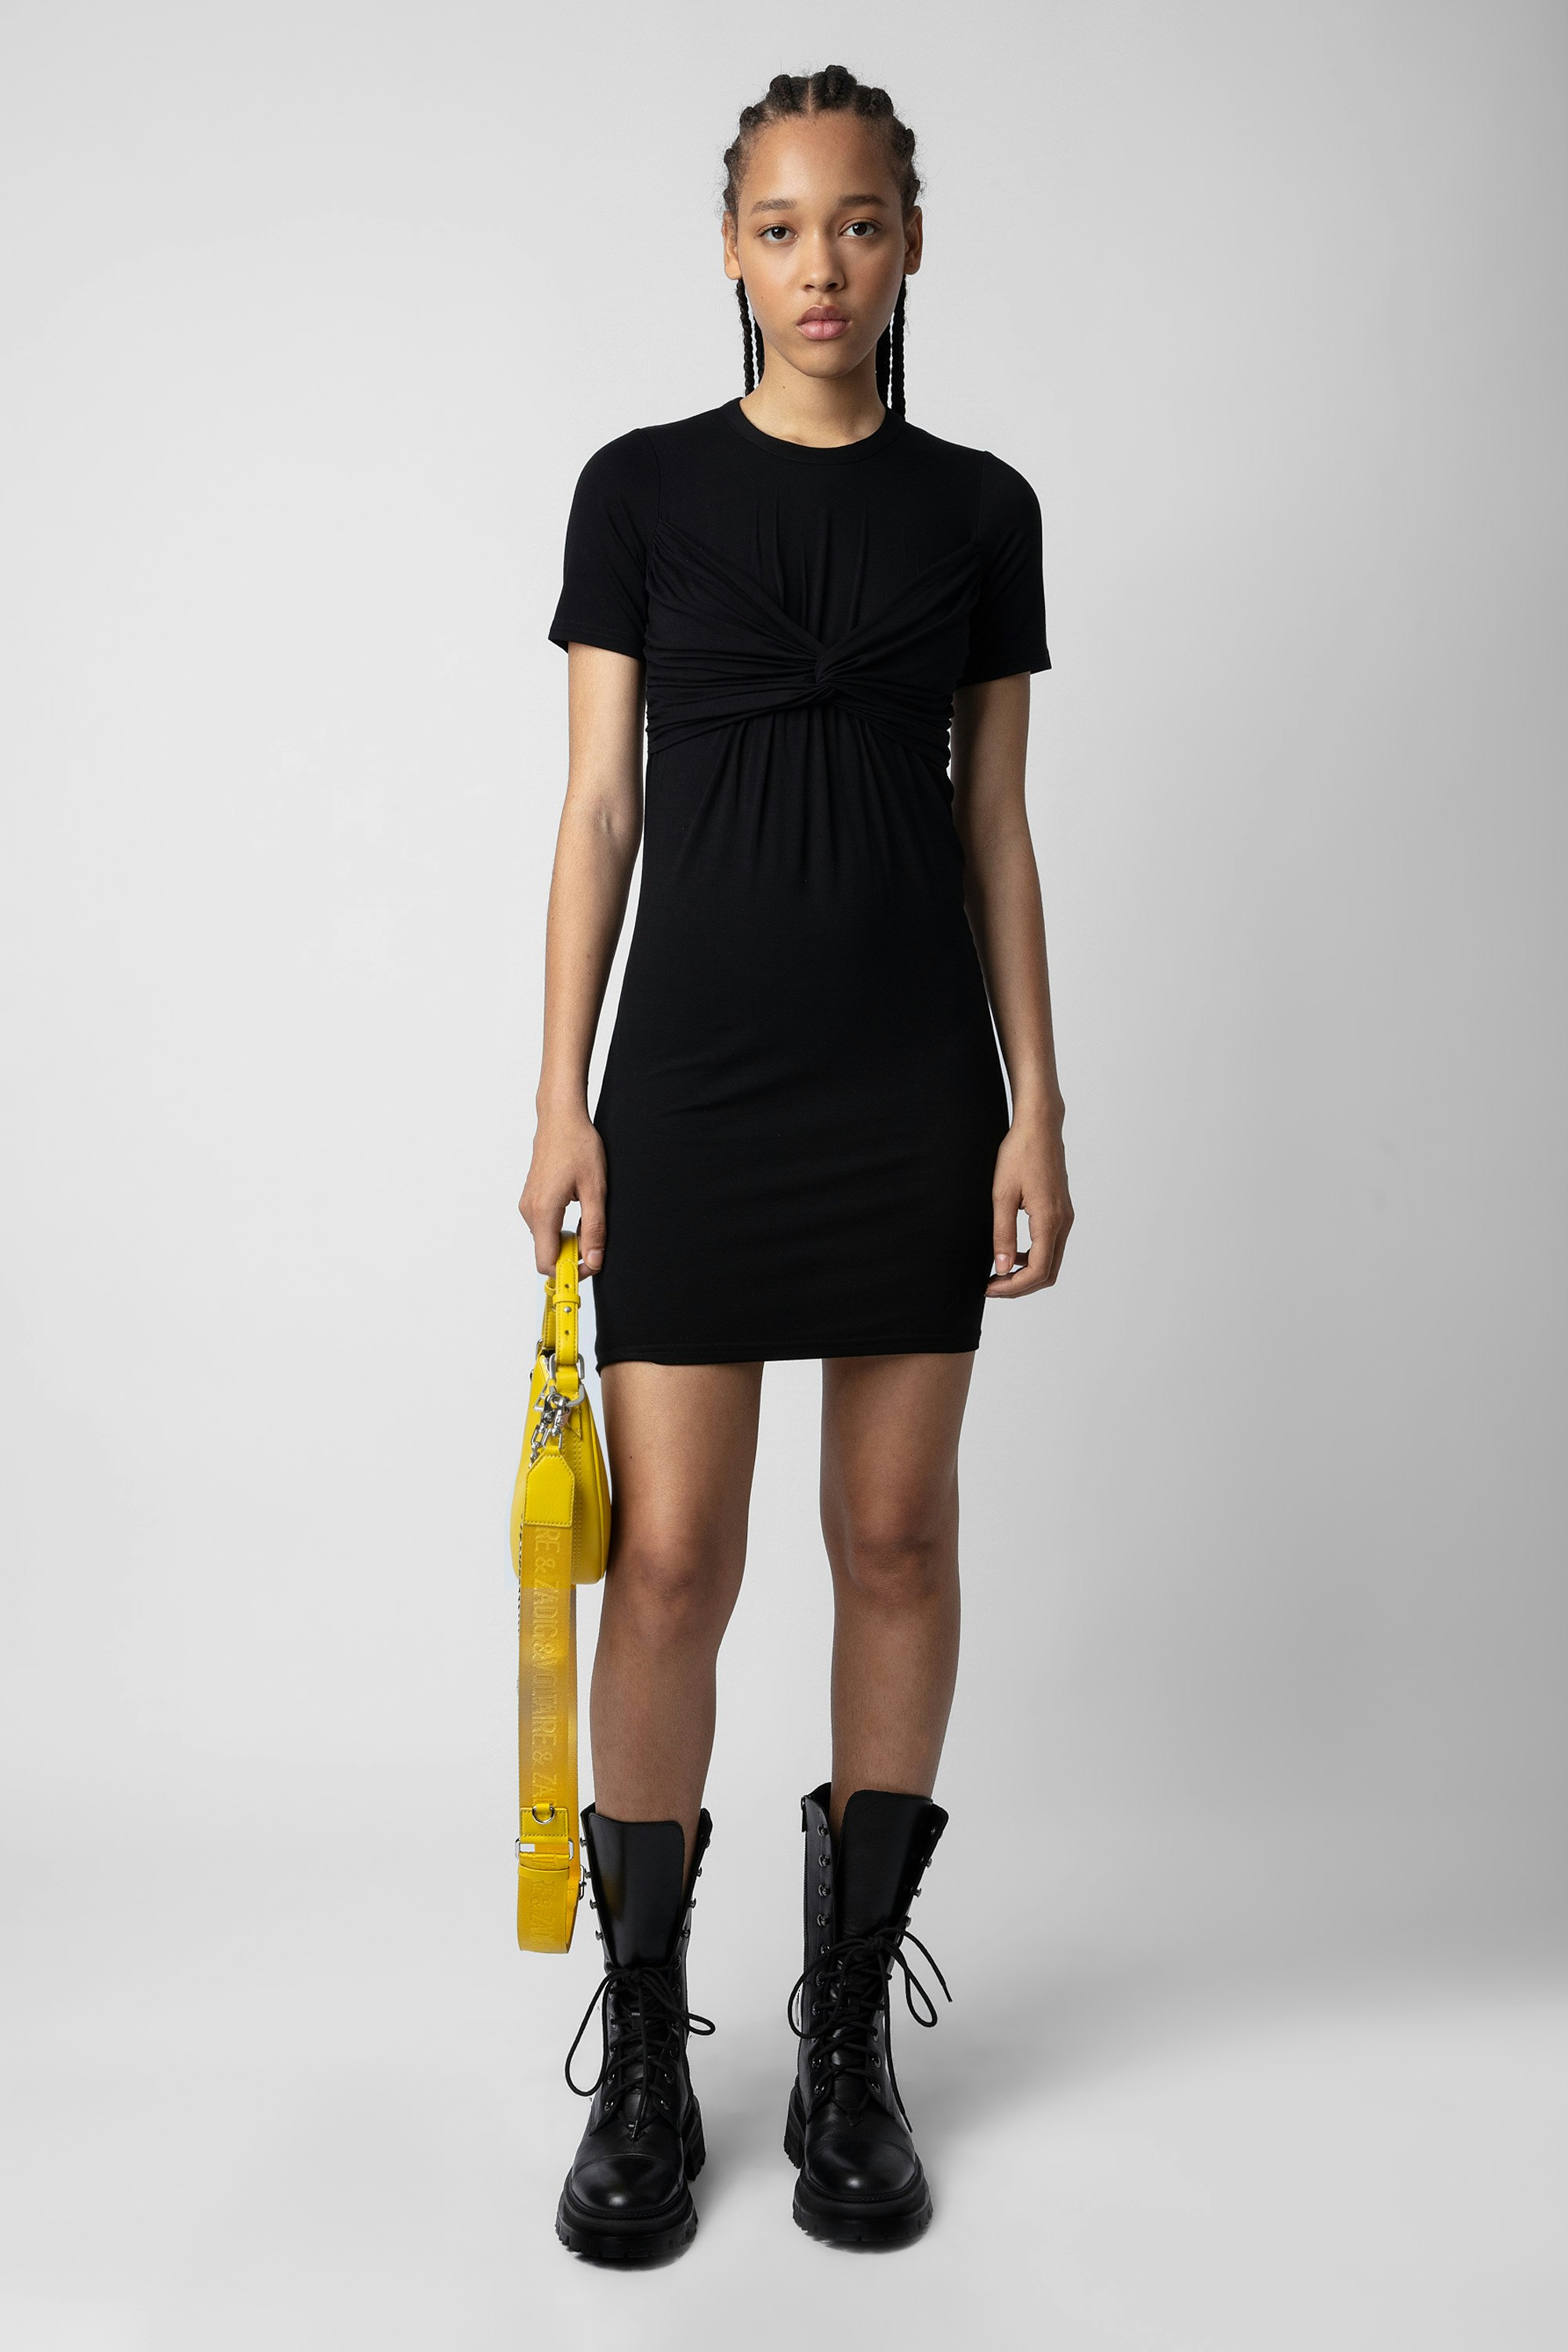 Mara Dress - Women’s short black jersey dress with draped bow at the waist.